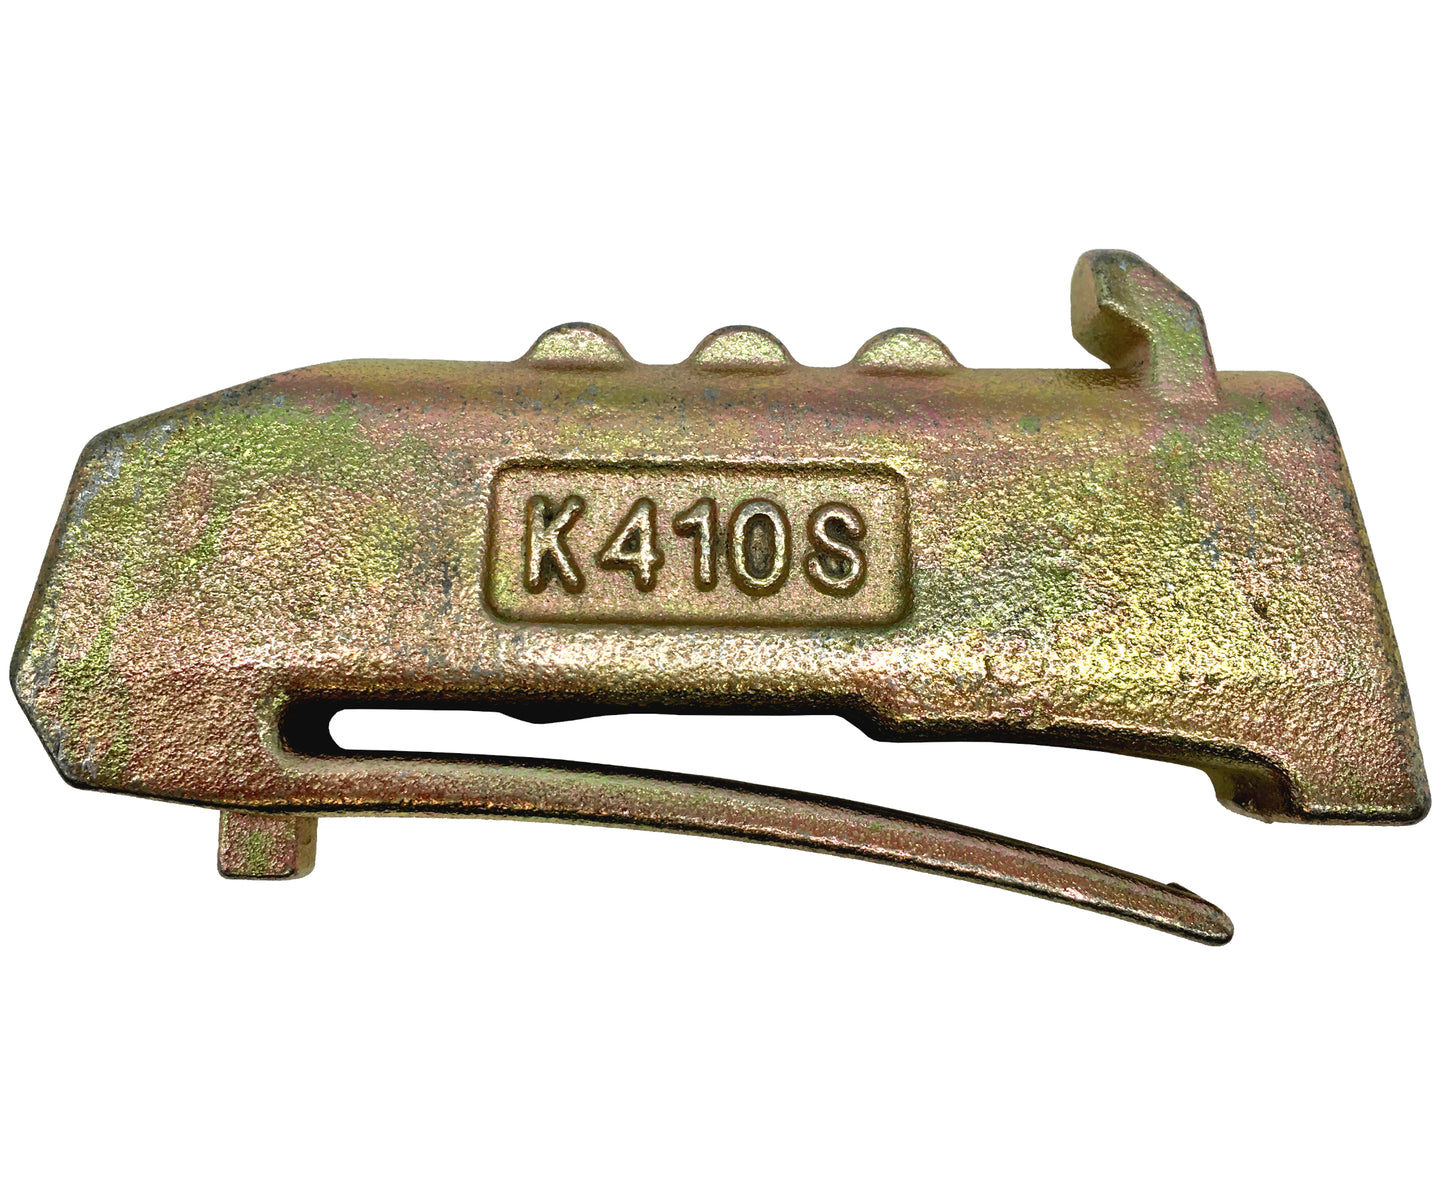 K410S Steel Pin - 'Hensley X410 Series'